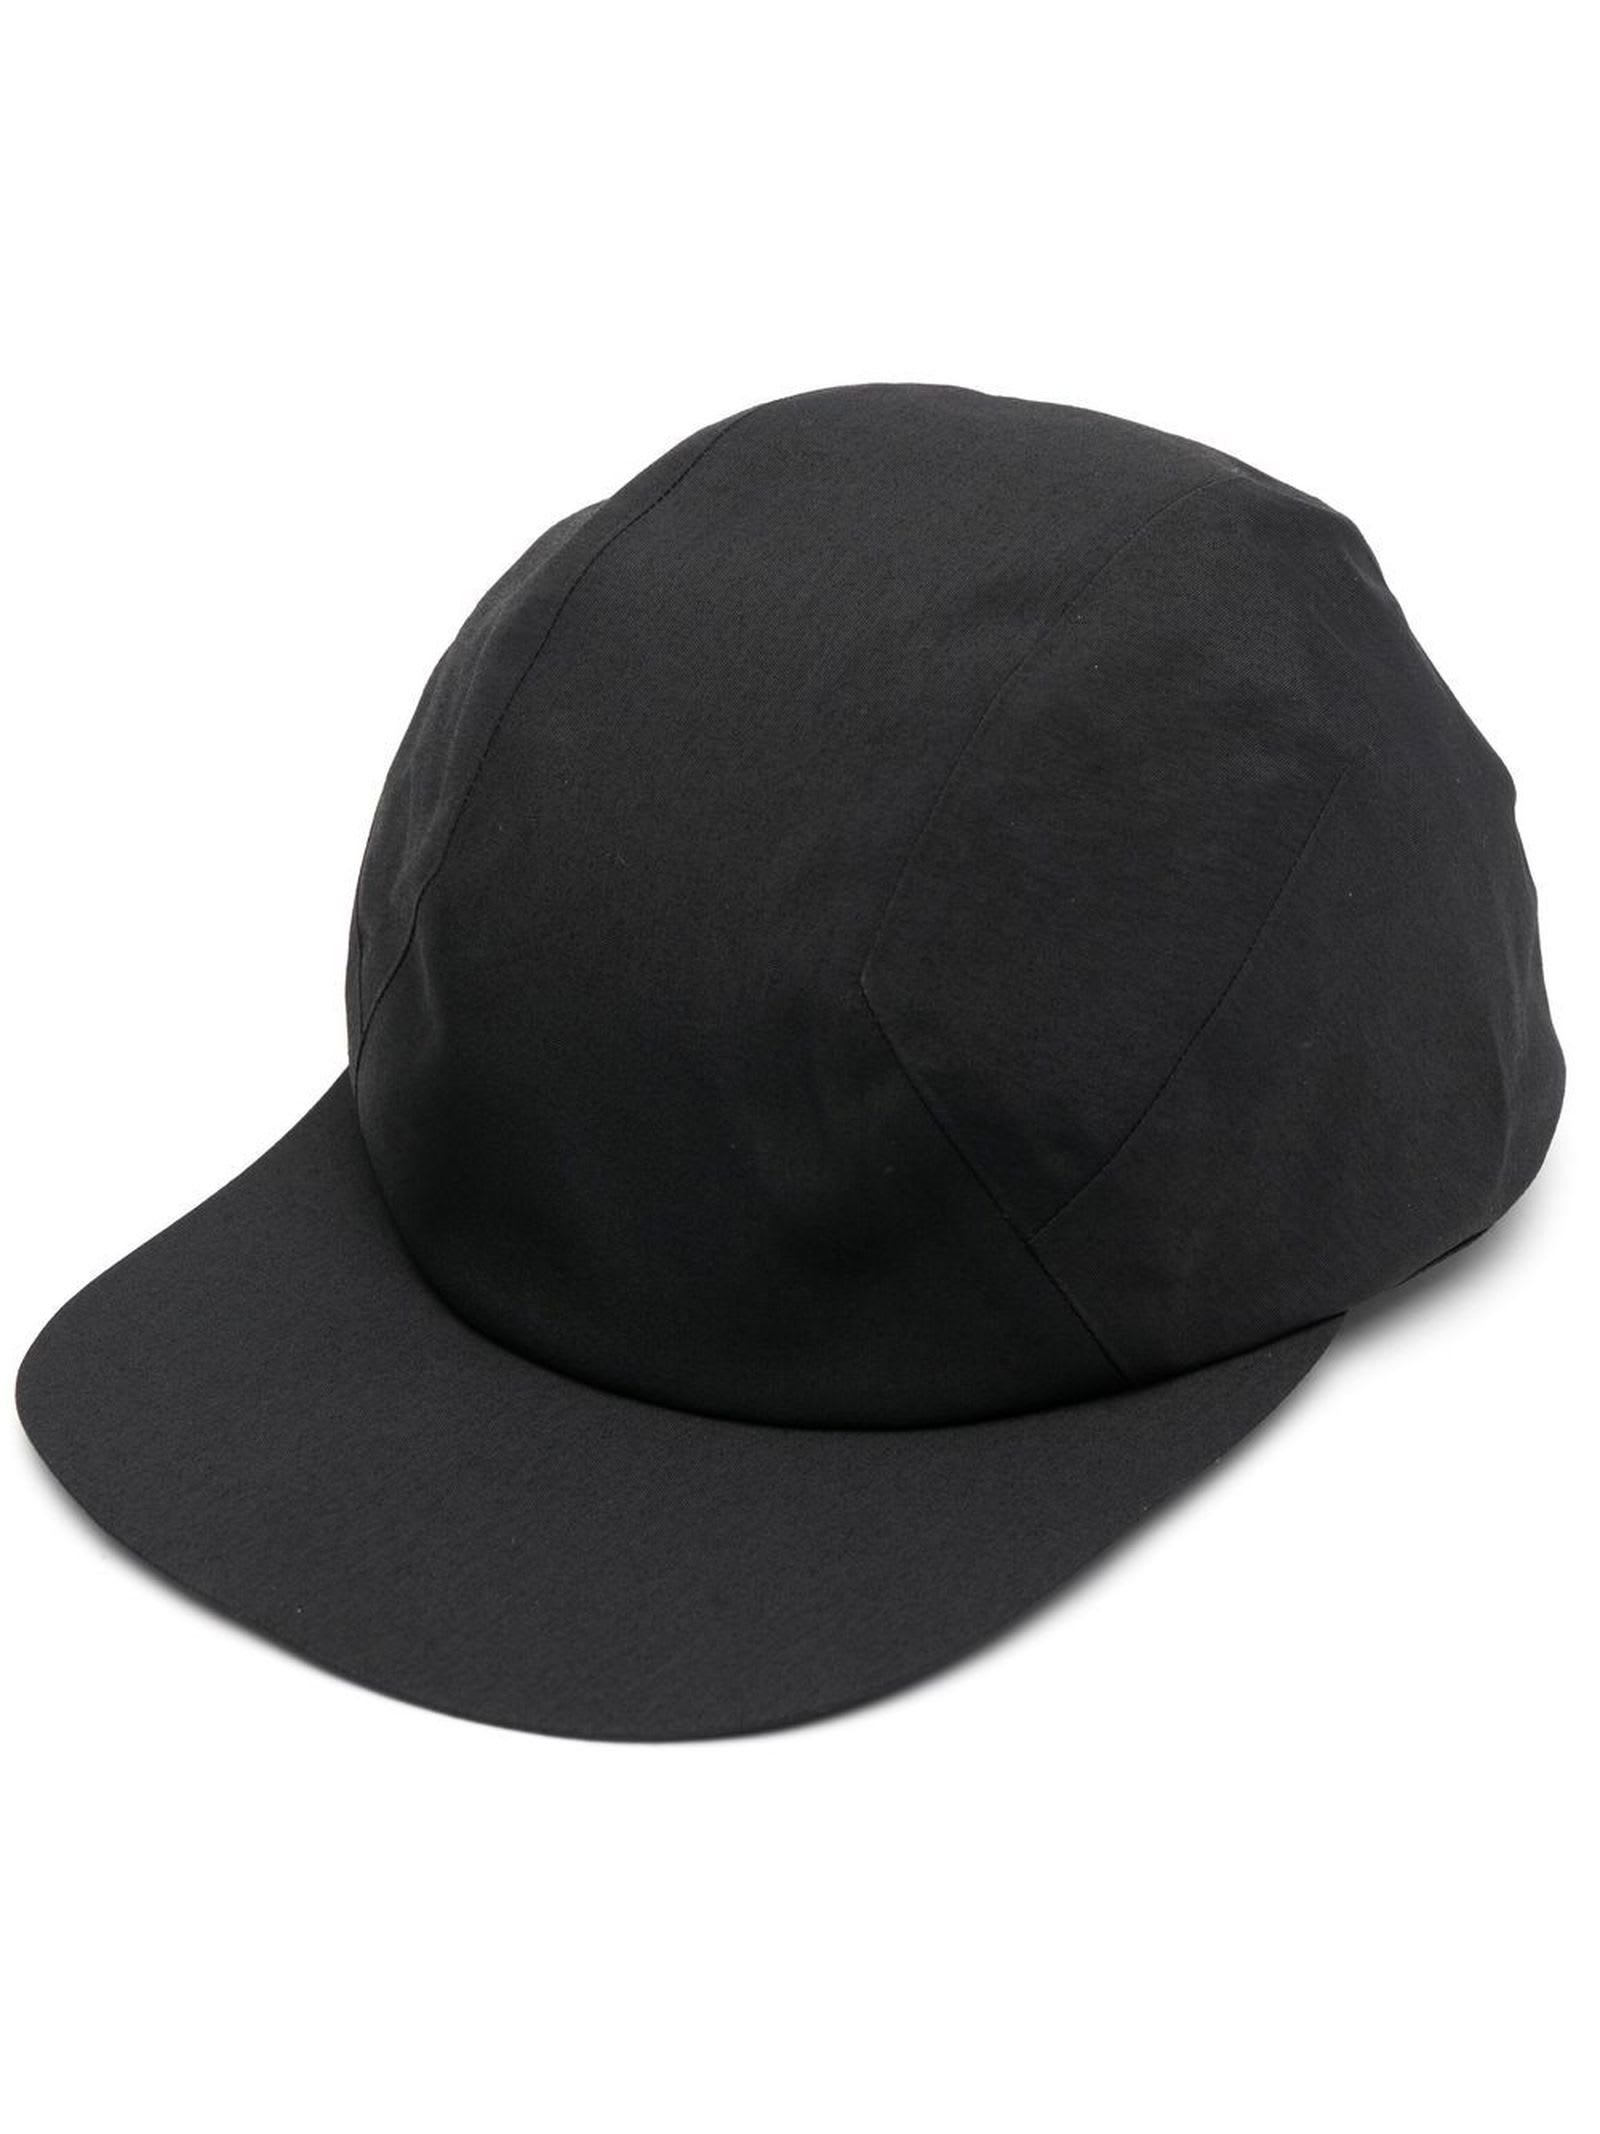 Black Plain Baseball Cap